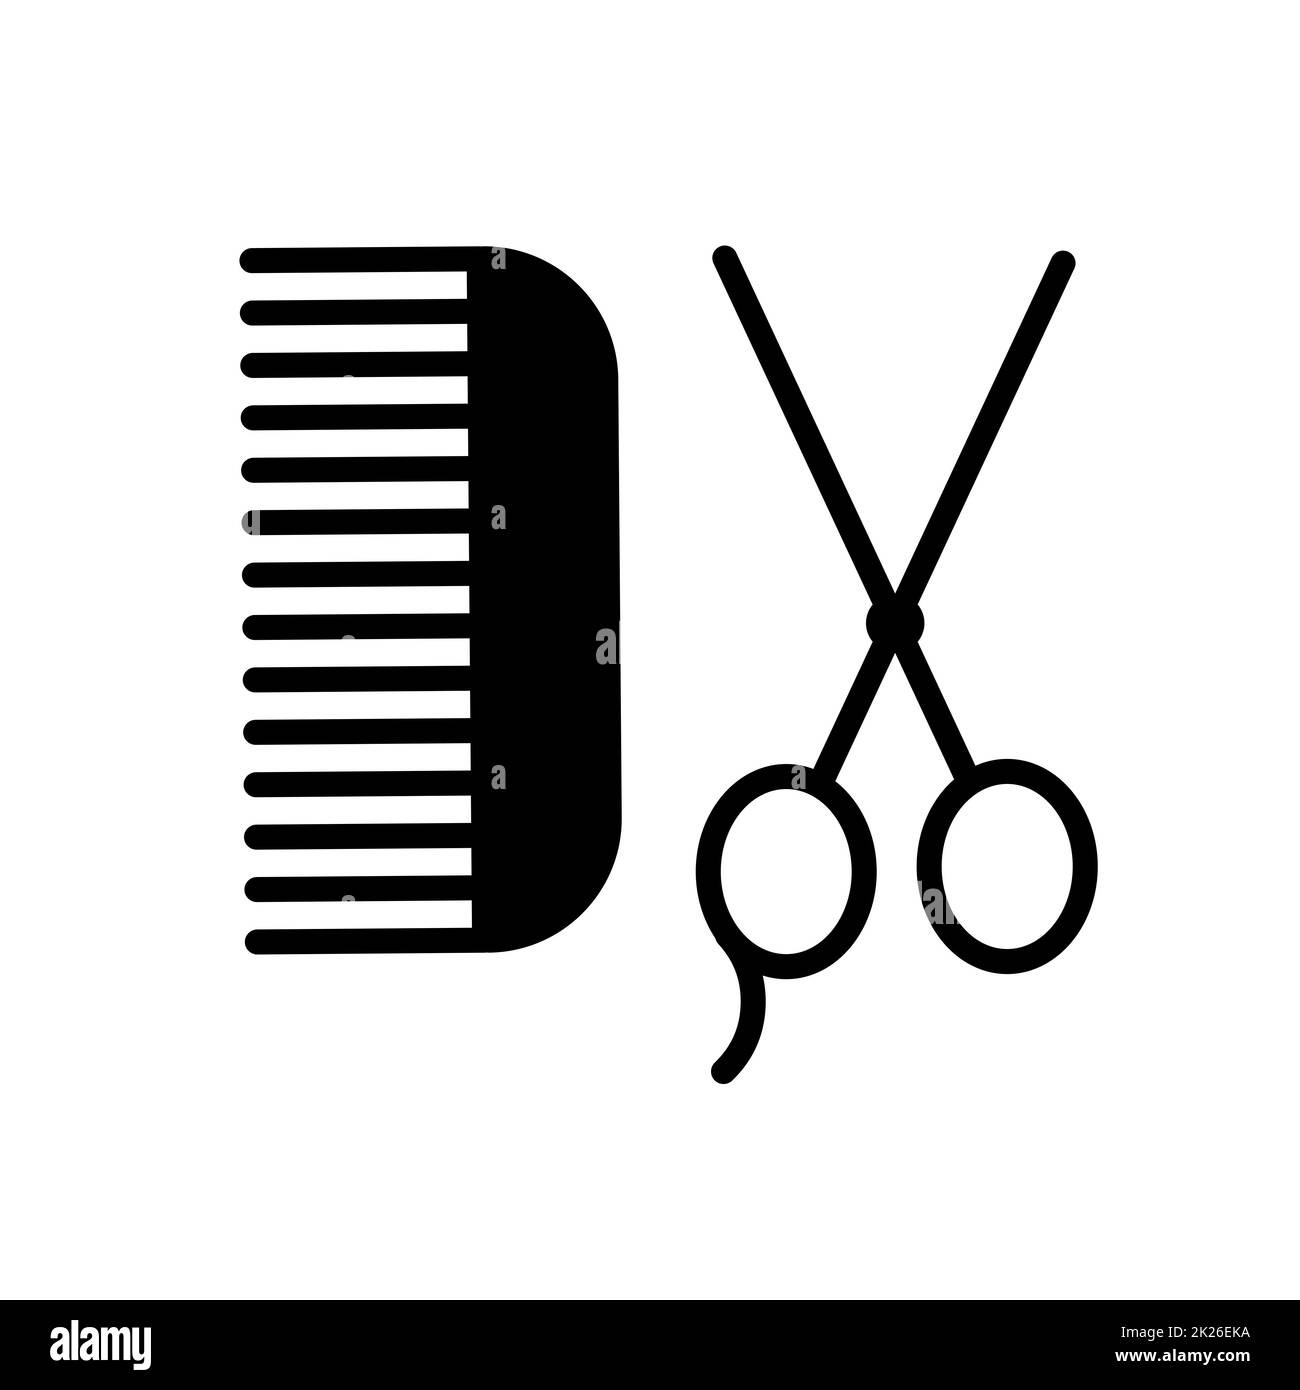 Animal grooming, hairbrush and scissors glyph icon Stock Photo